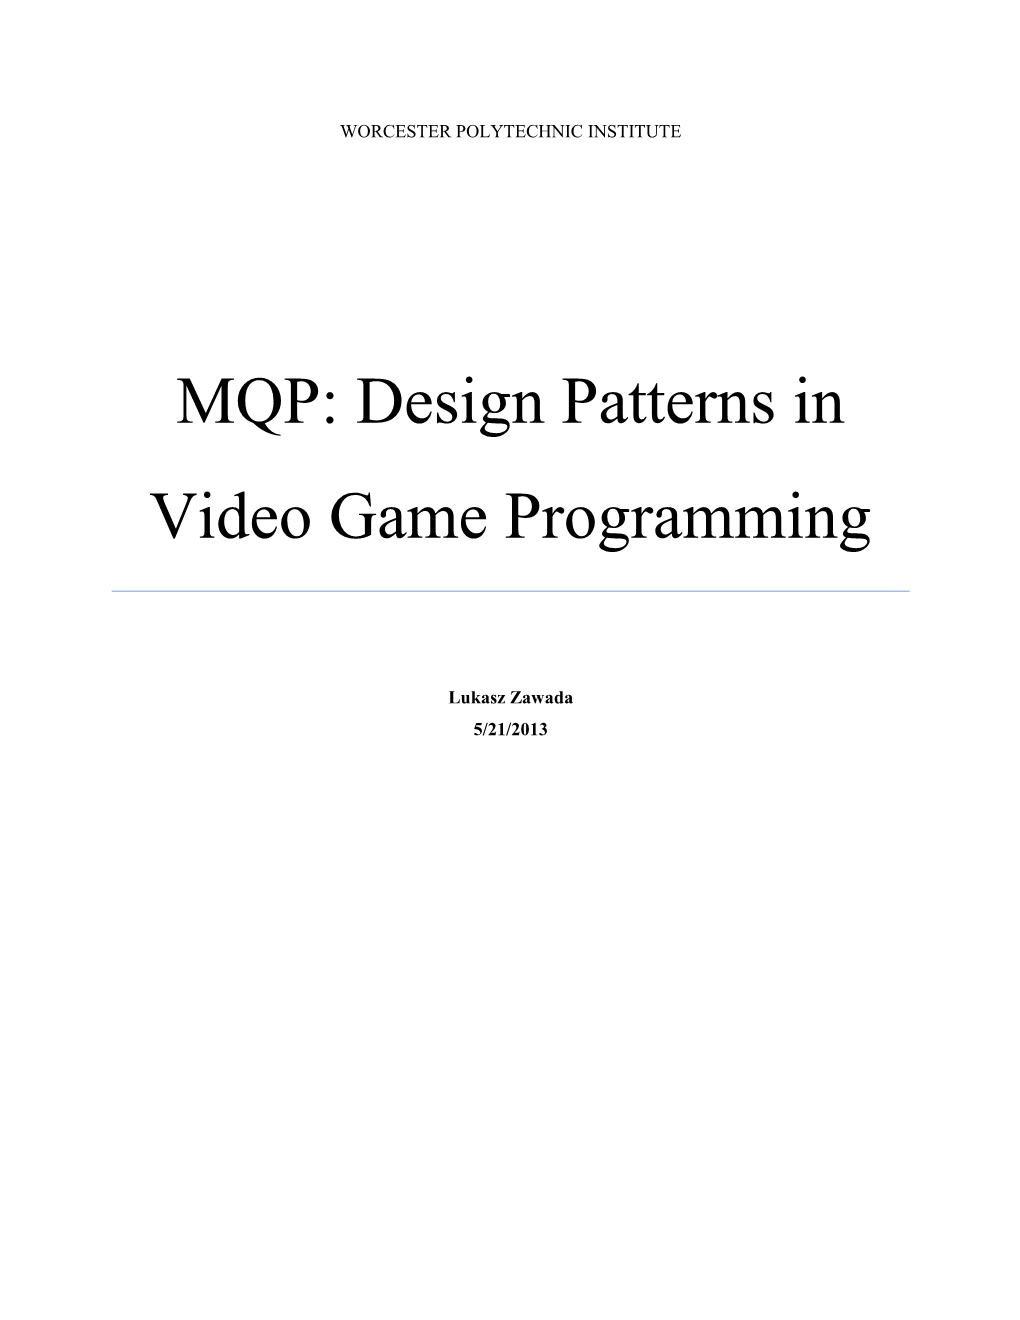 MQP: Design Patterns in Video Game Programming